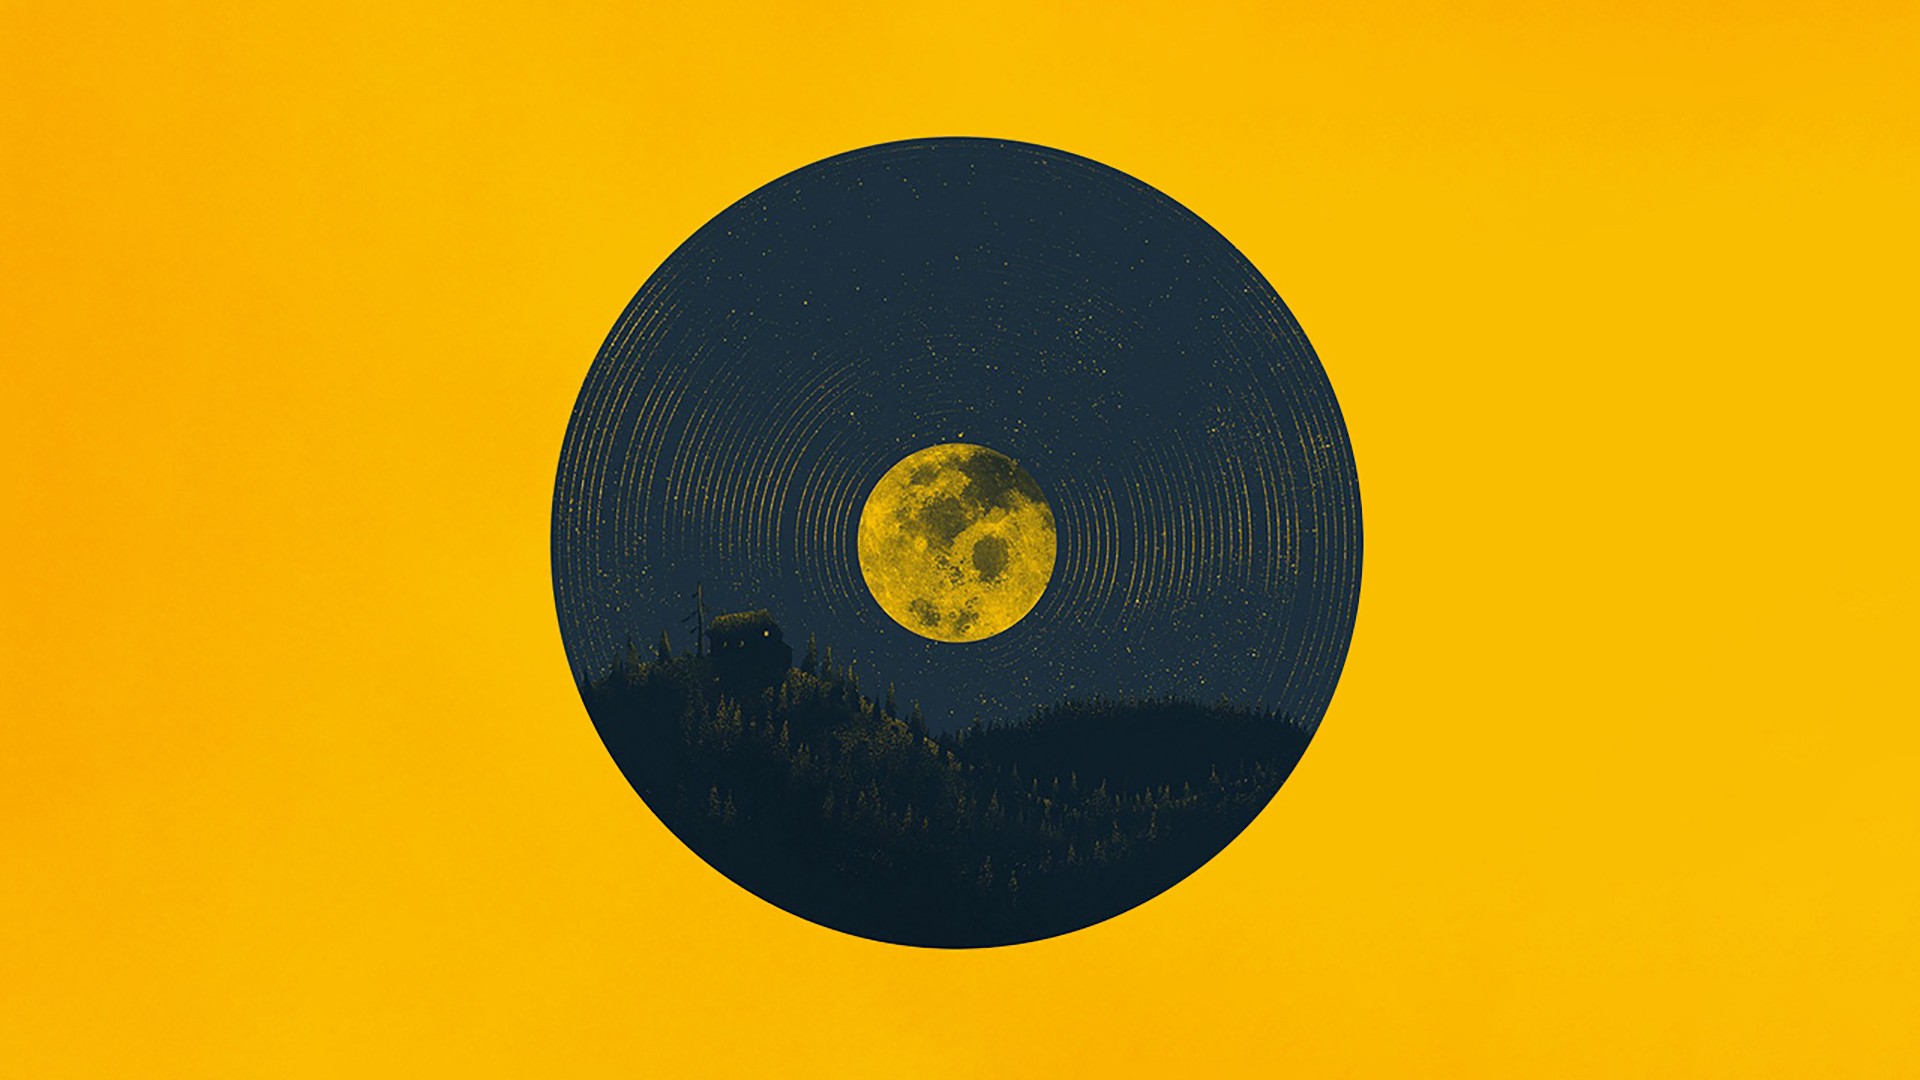 General 1920x1080 simple background stars Moon yellow background night hills cabin landscape full moon yellow vinyl artwork music